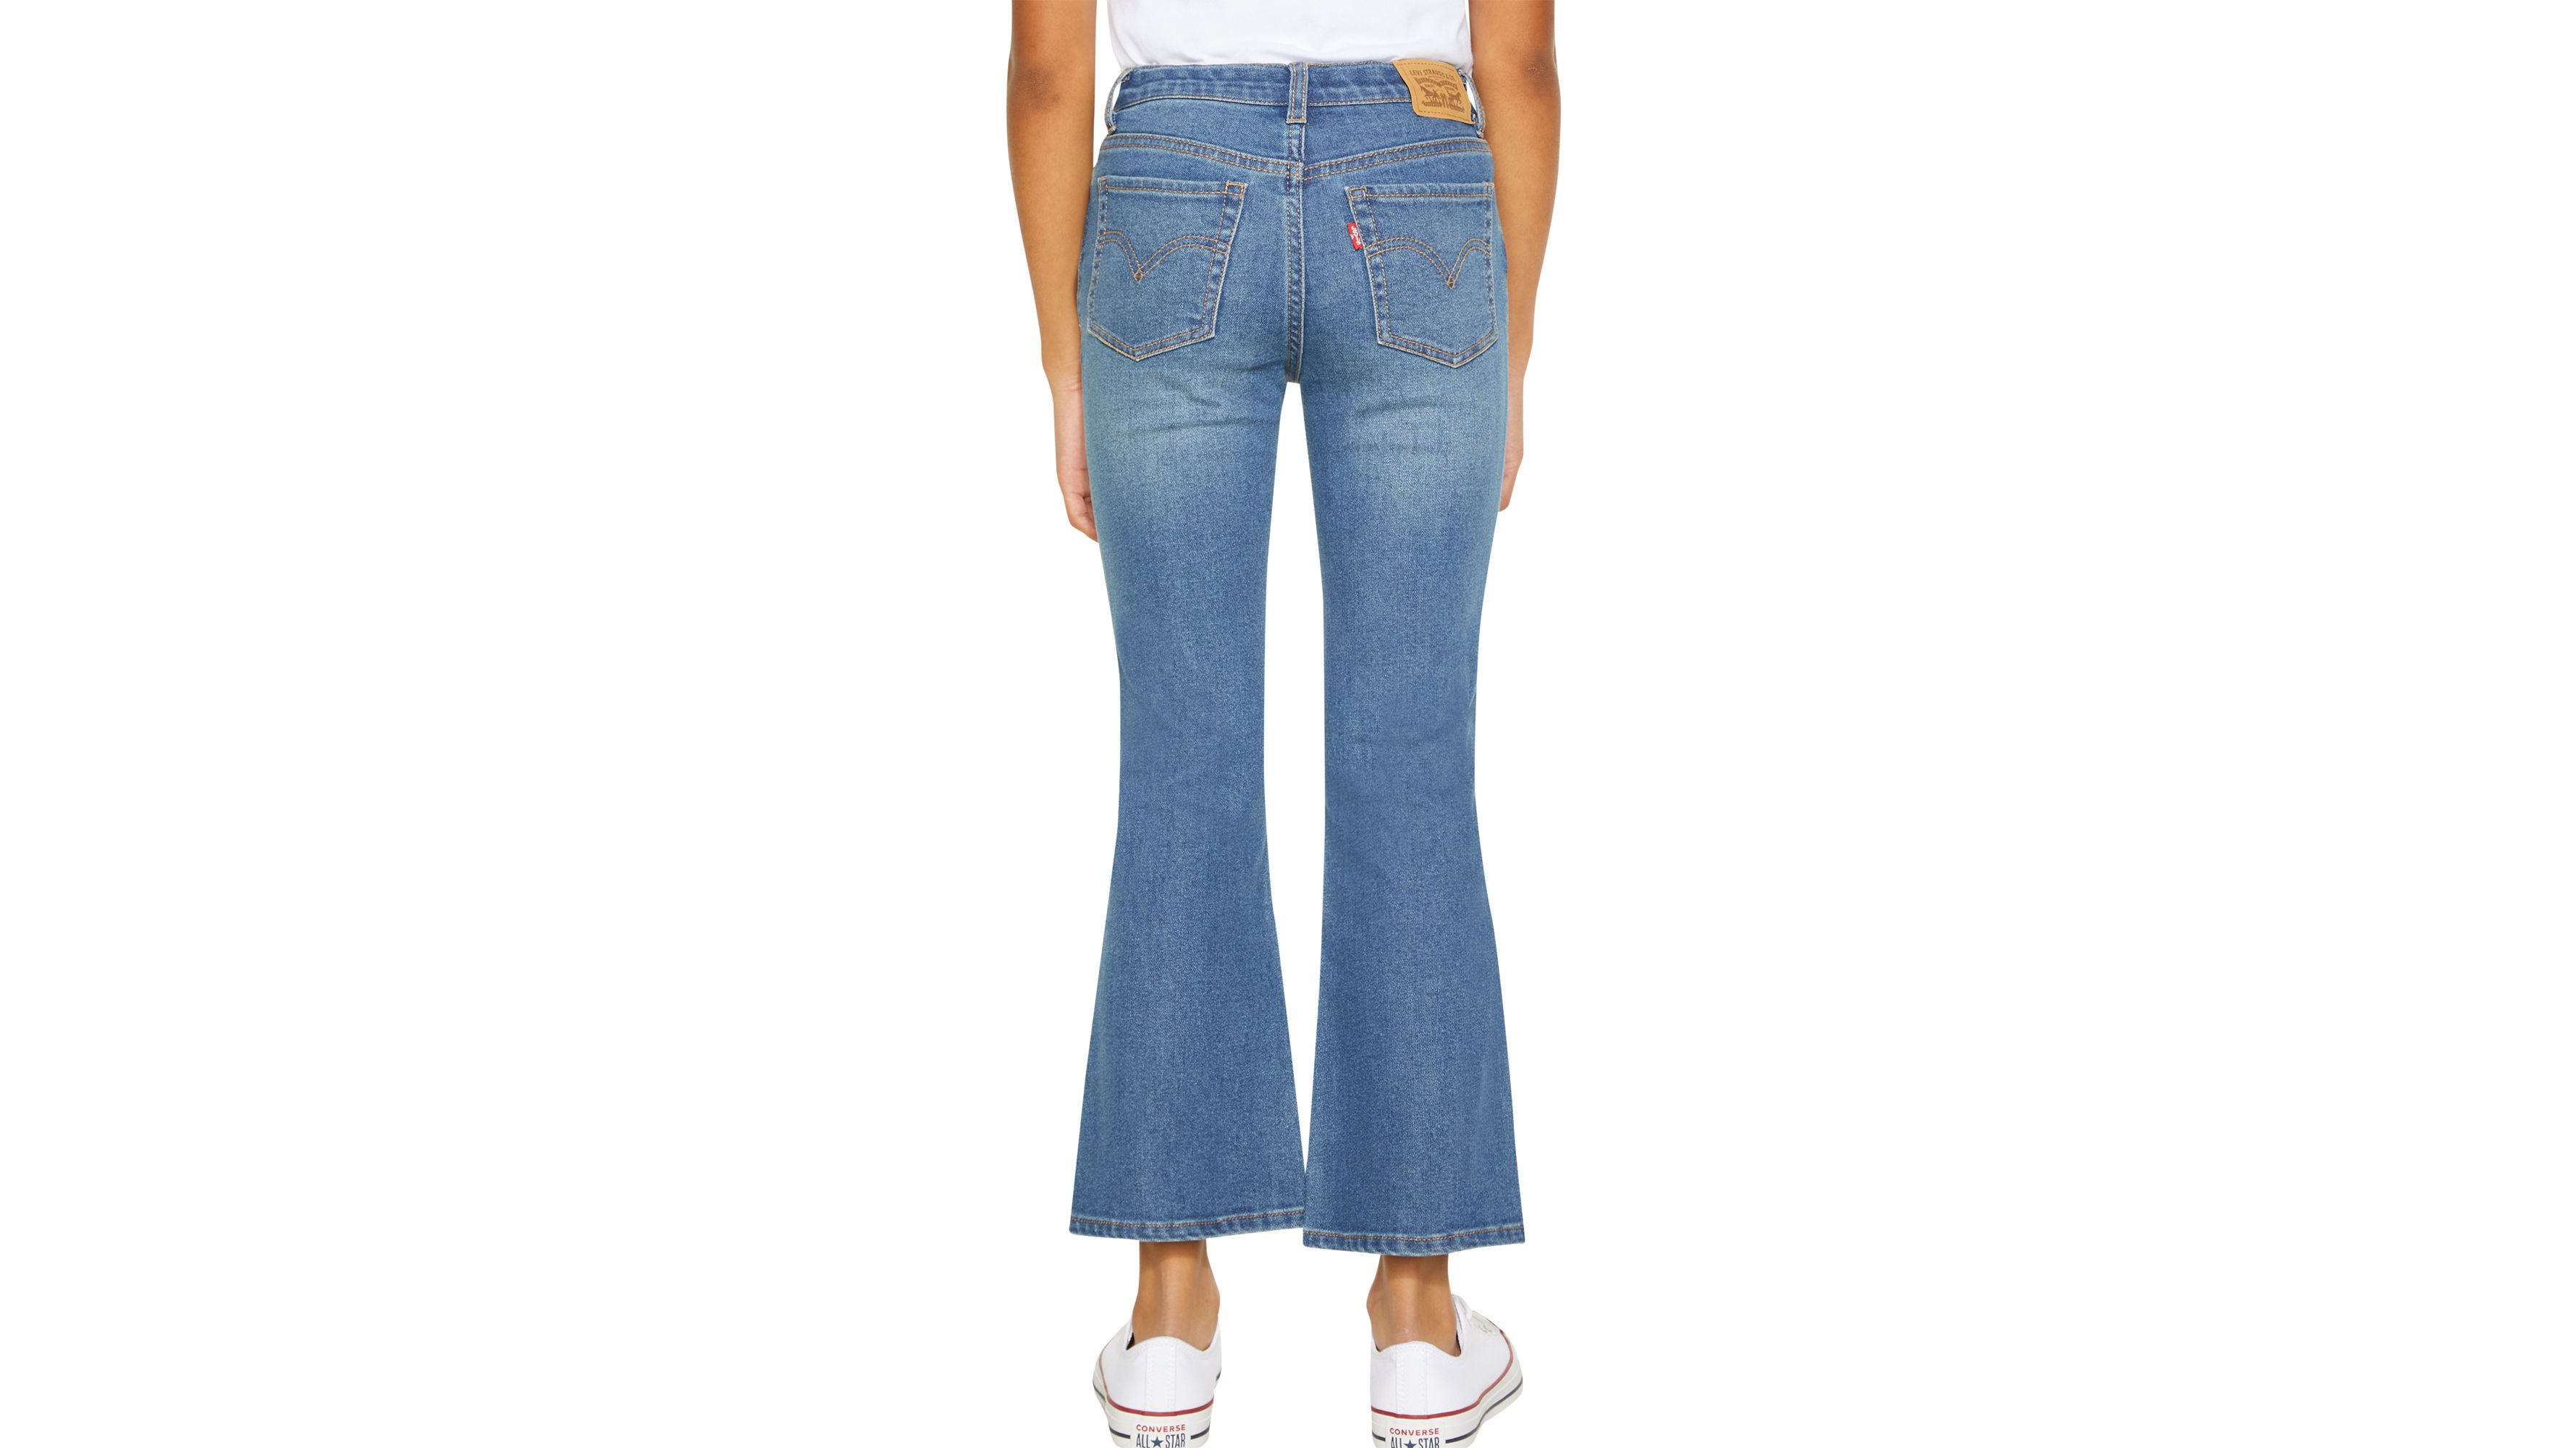 High Rise Cropped Flare Big Girls Jeans 7-16 - Medium Wash